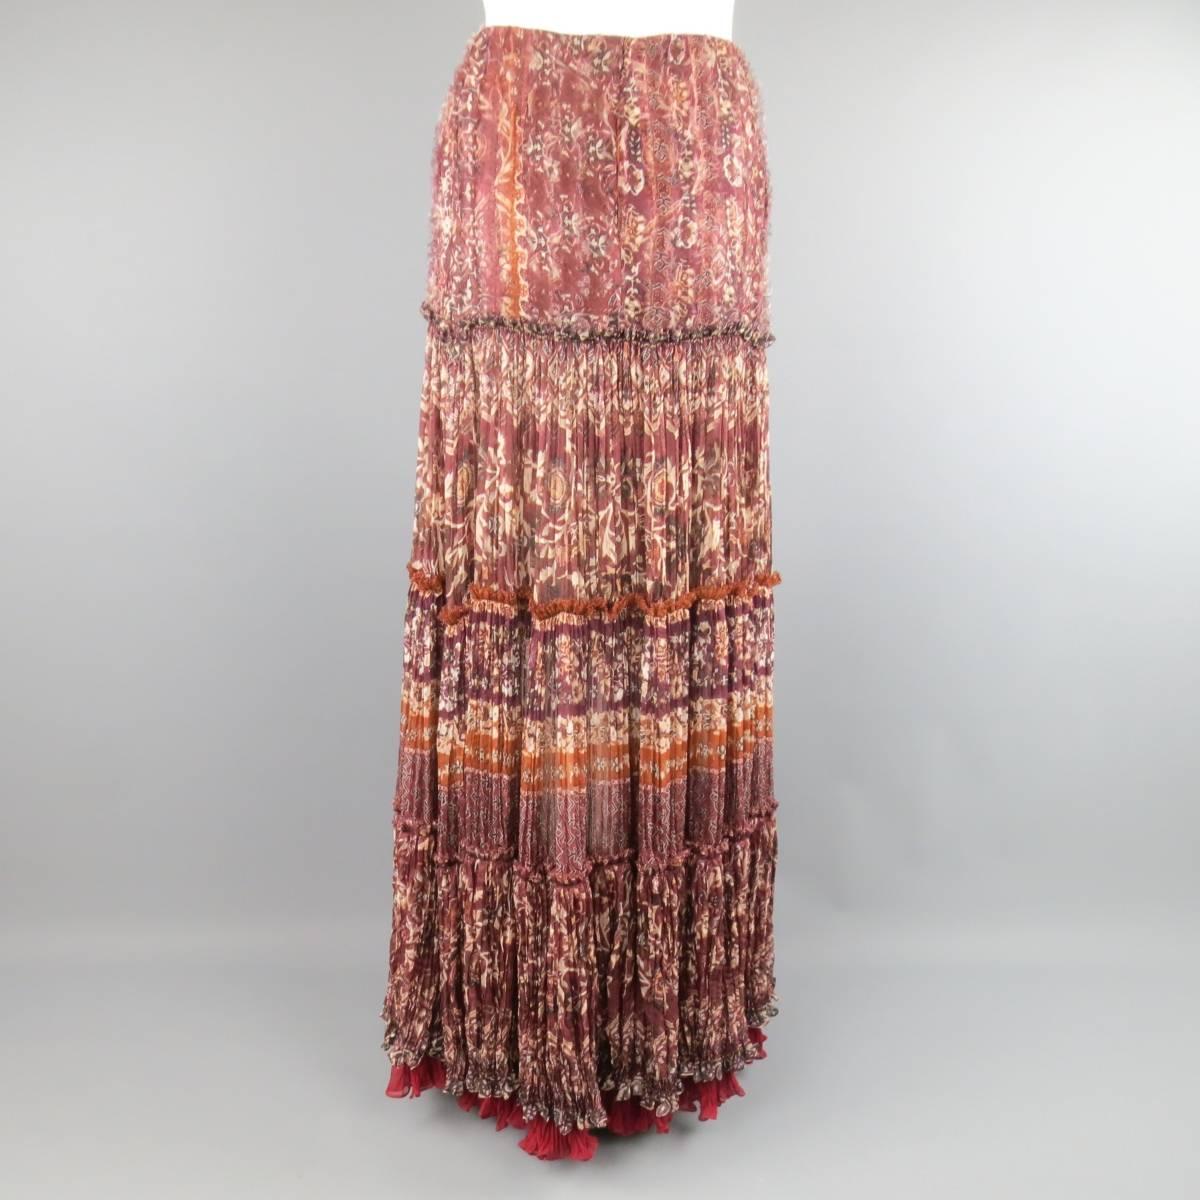 OSCAR DE LA RENTA Skirt - Size 8 Burgundy Floral Textured Silk Boho Maxi Skirt 4